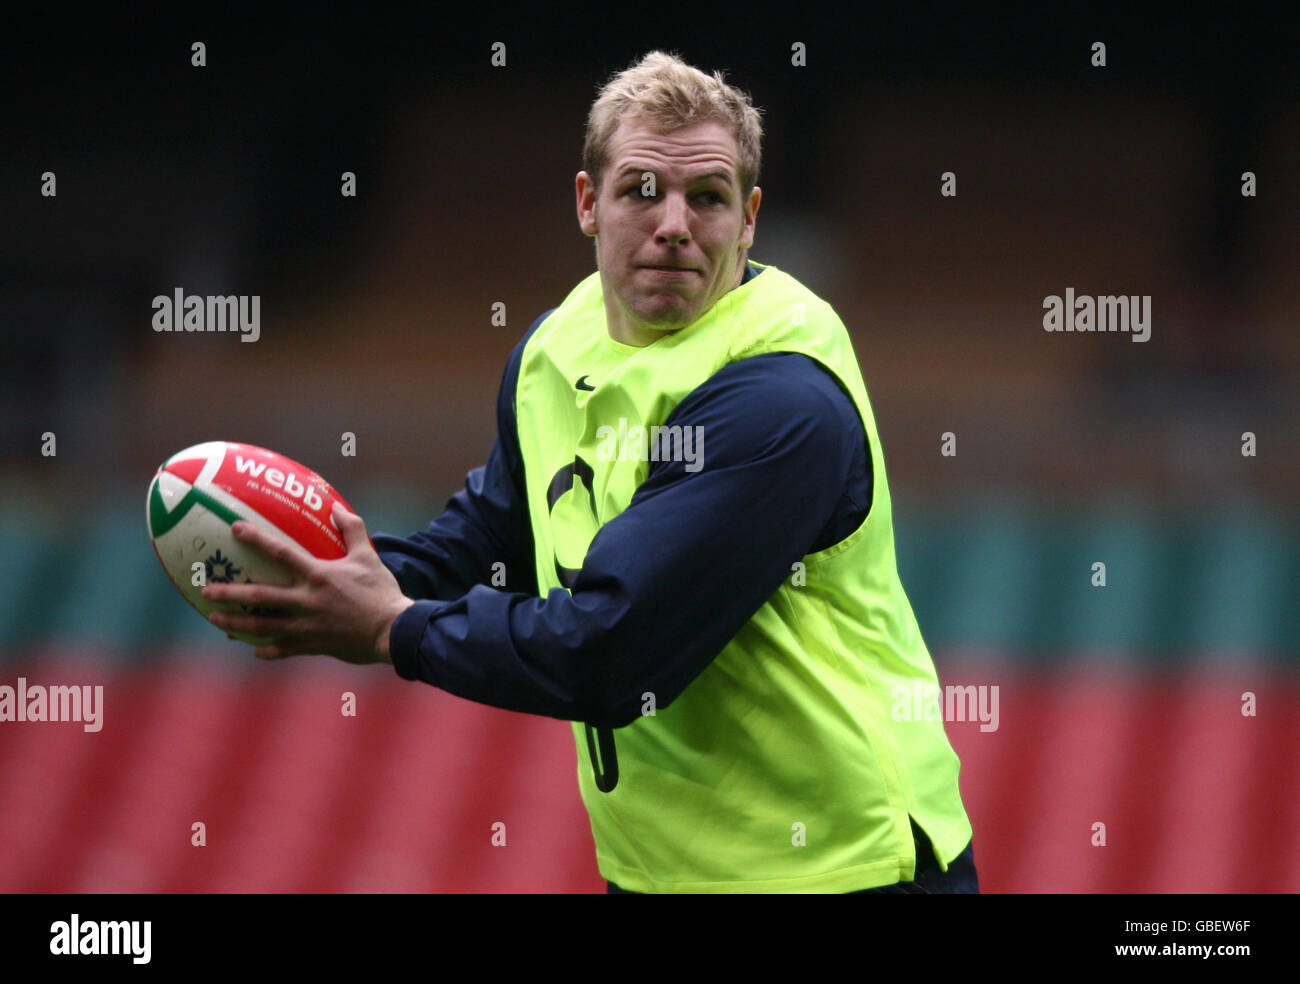 Rugby Union - England Training Session - Millennium Stadium. James Haskell, England Stock Photo